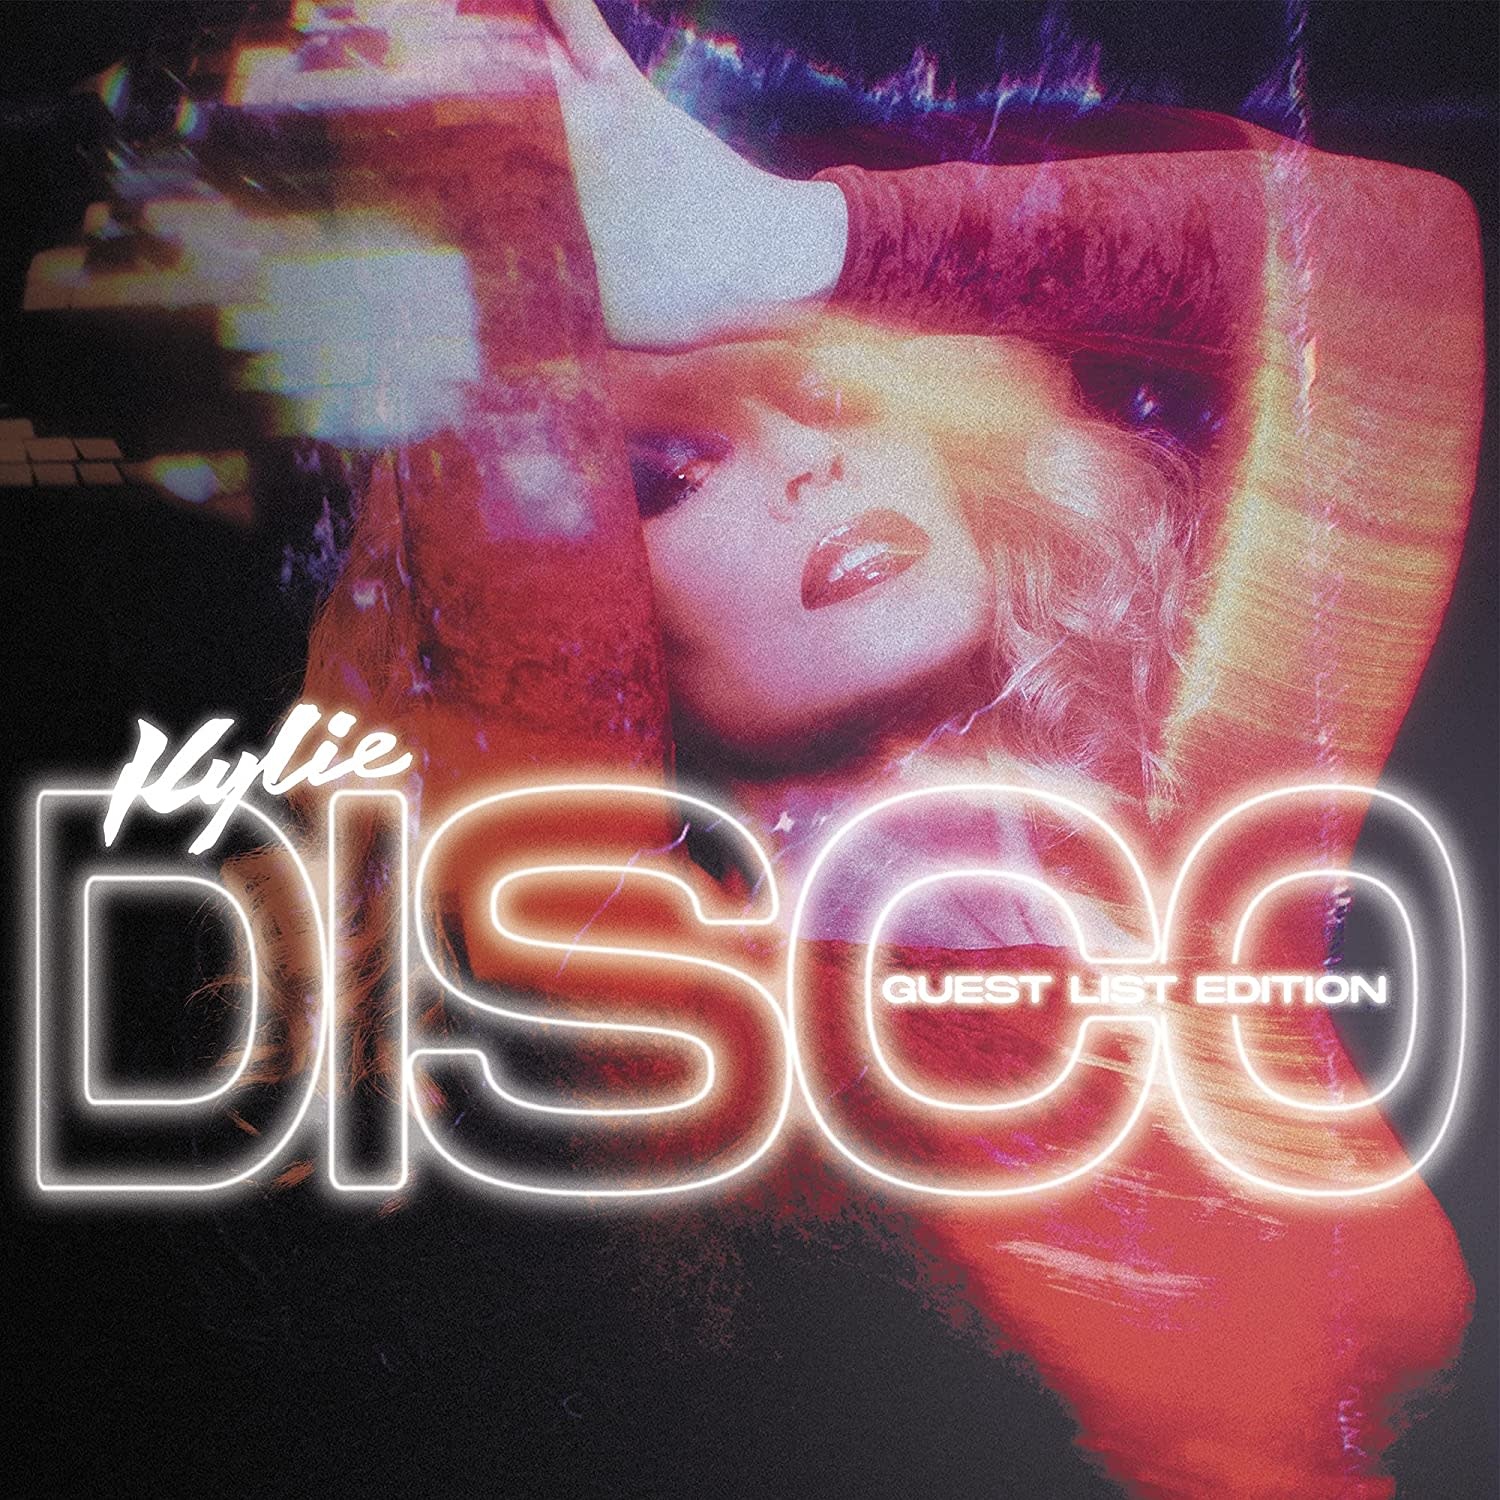 Kylie Minogue - DISCO: Guest List Edition (Vinyl)